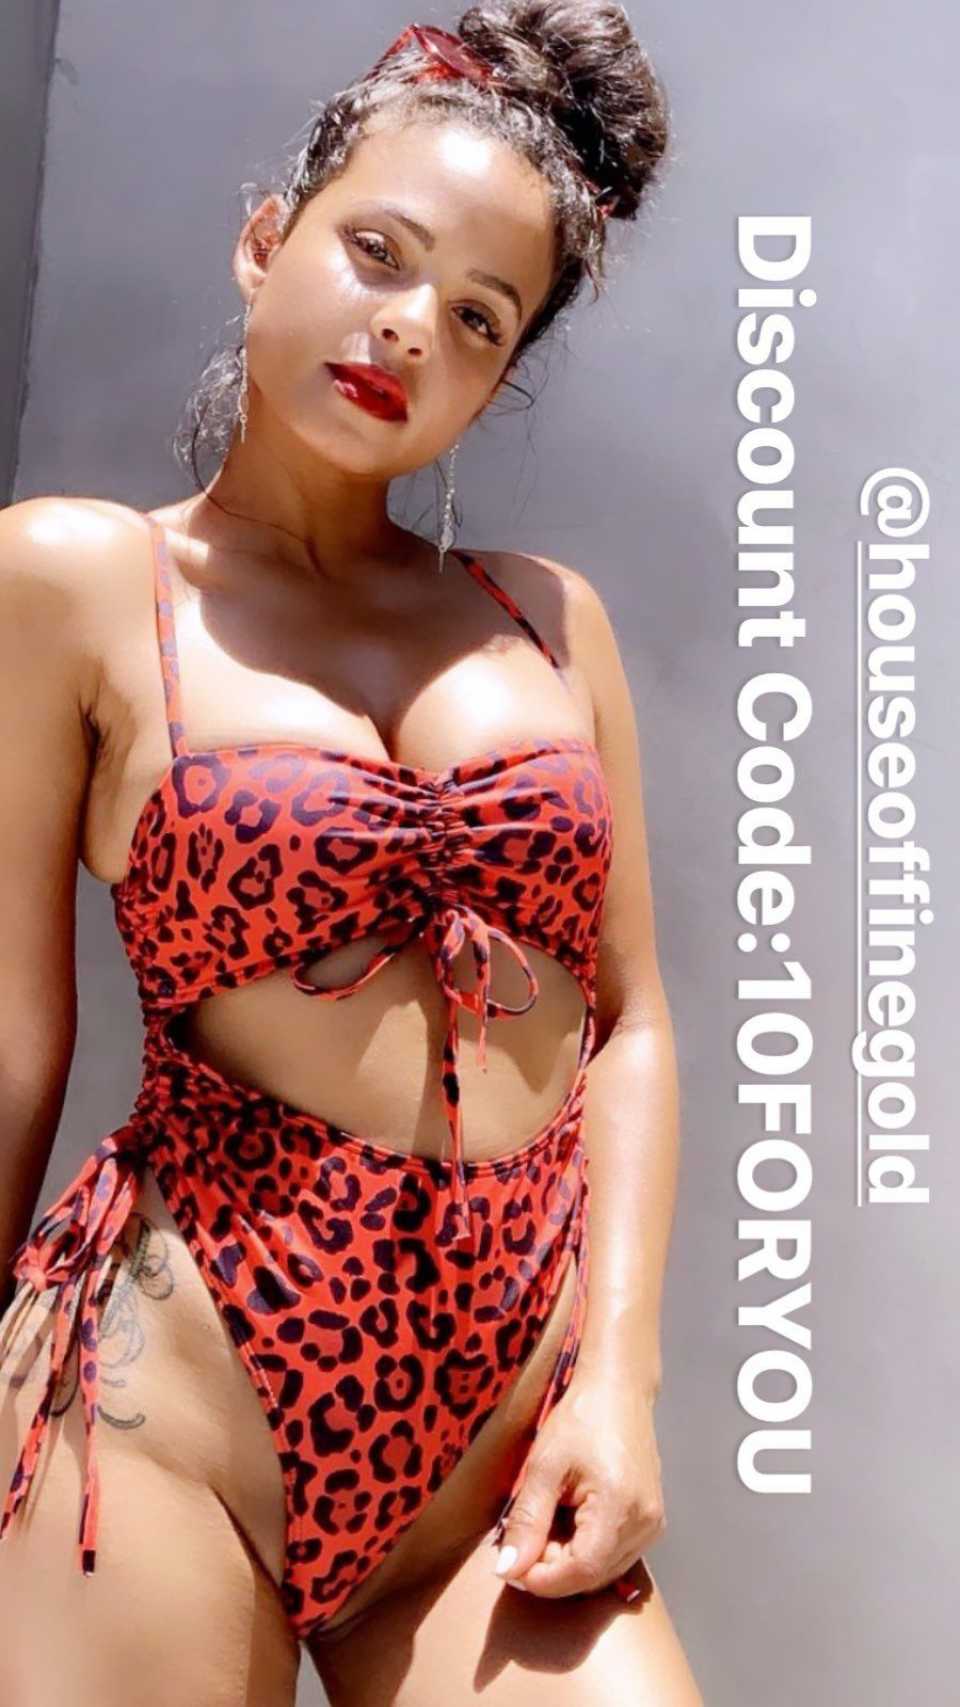 Christina Milian â€“ Instagram and social media